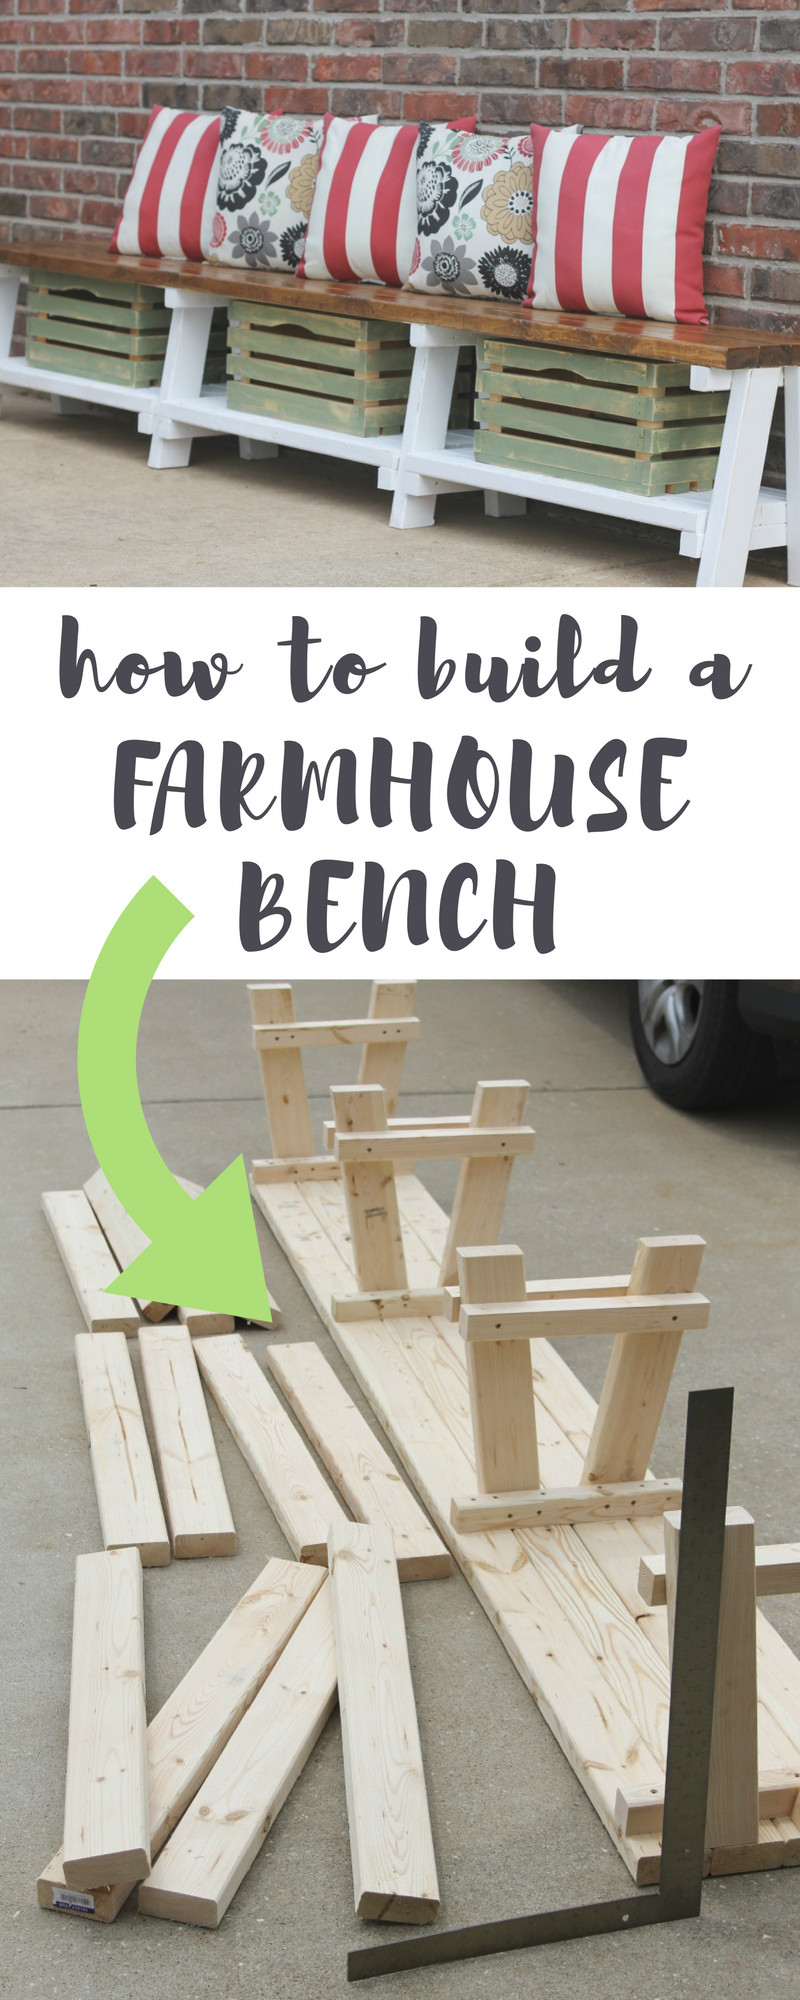 Farmhouse Bench With Storage
 Simple DIY Farmhouse Bench Tutorial With Storage